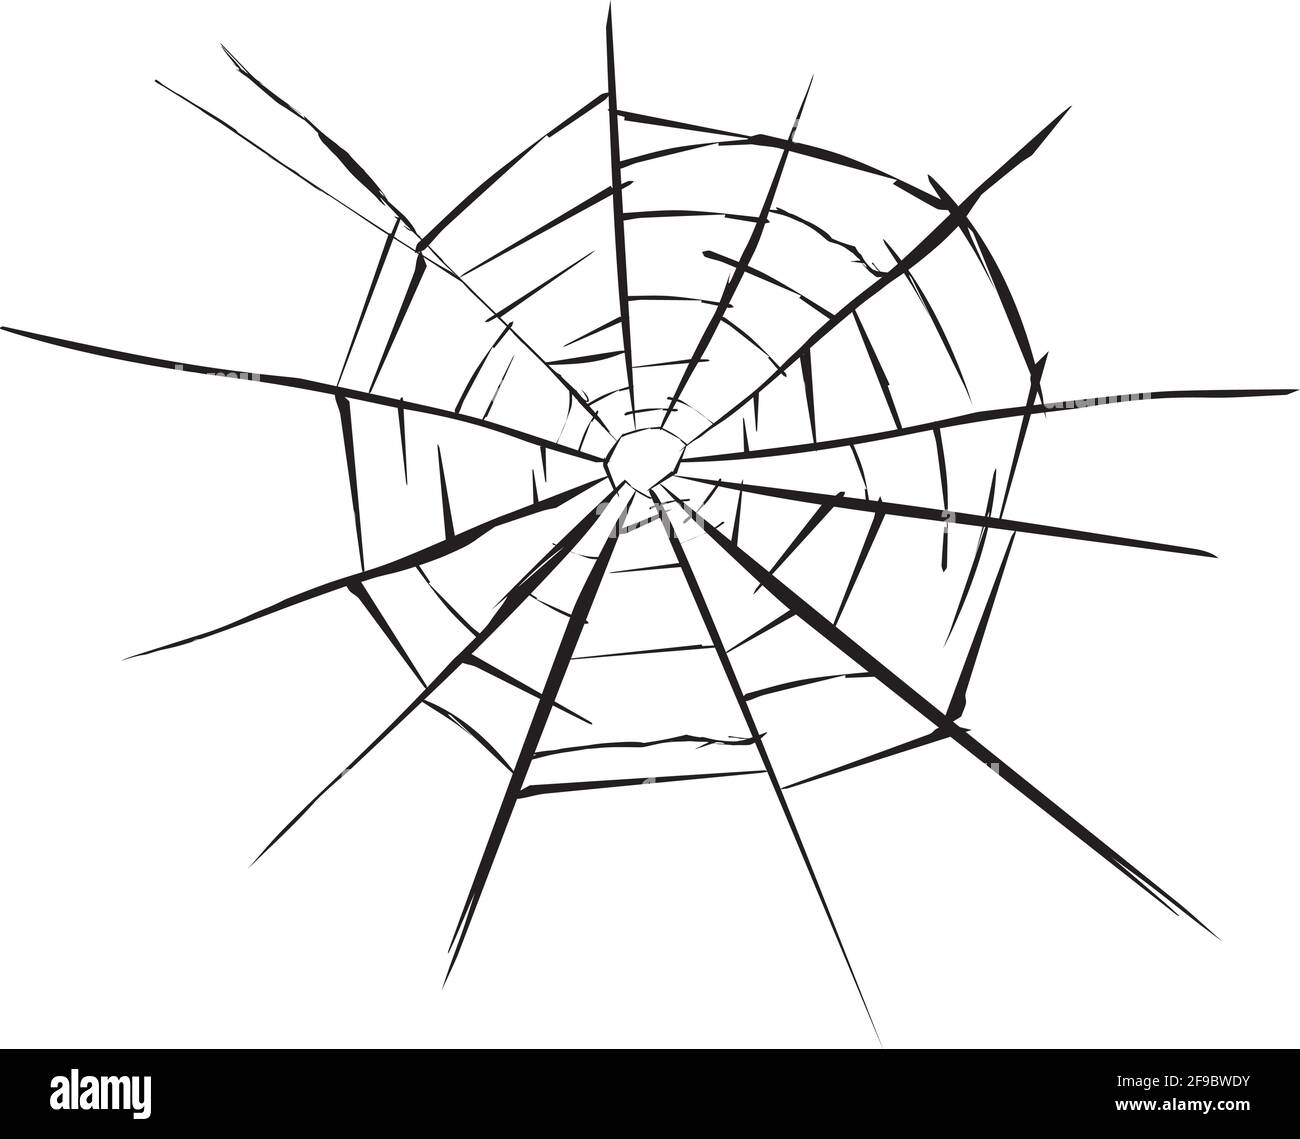 Texture of broken glass cracks, abstract vector illustration. Stock Vector